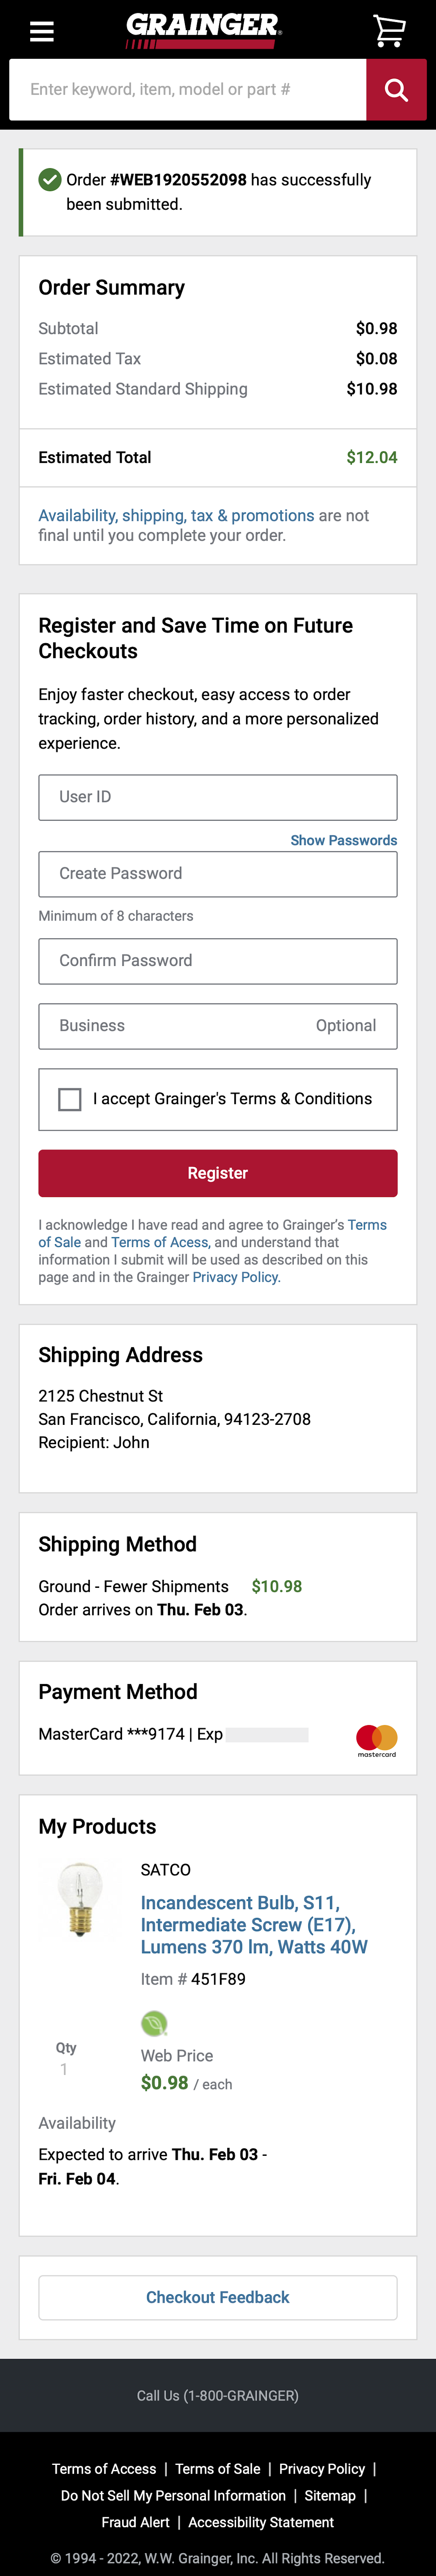 Mobile screenshot of Grainger